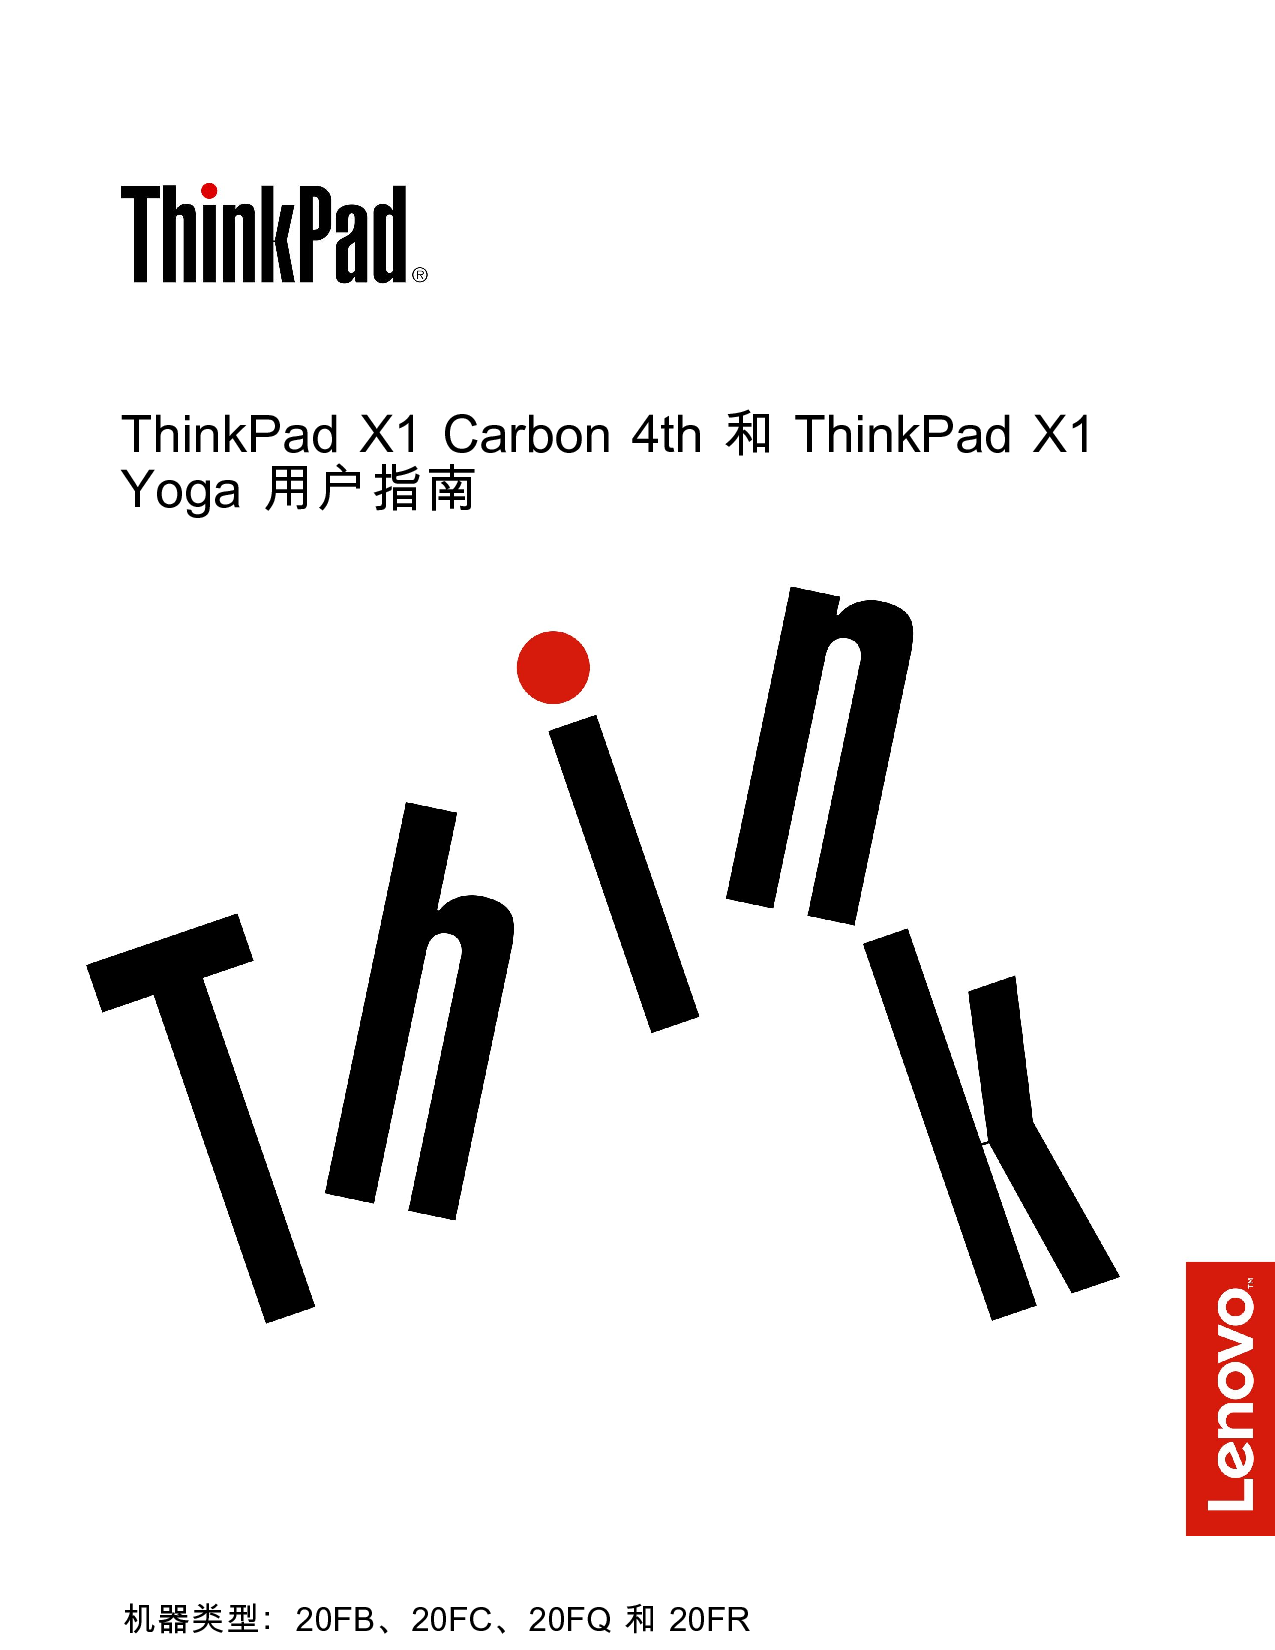 联想 Lenovo ThinkPad X1 CARBON 第四代, ThinkPad X1 YOGA 用户指南 封面